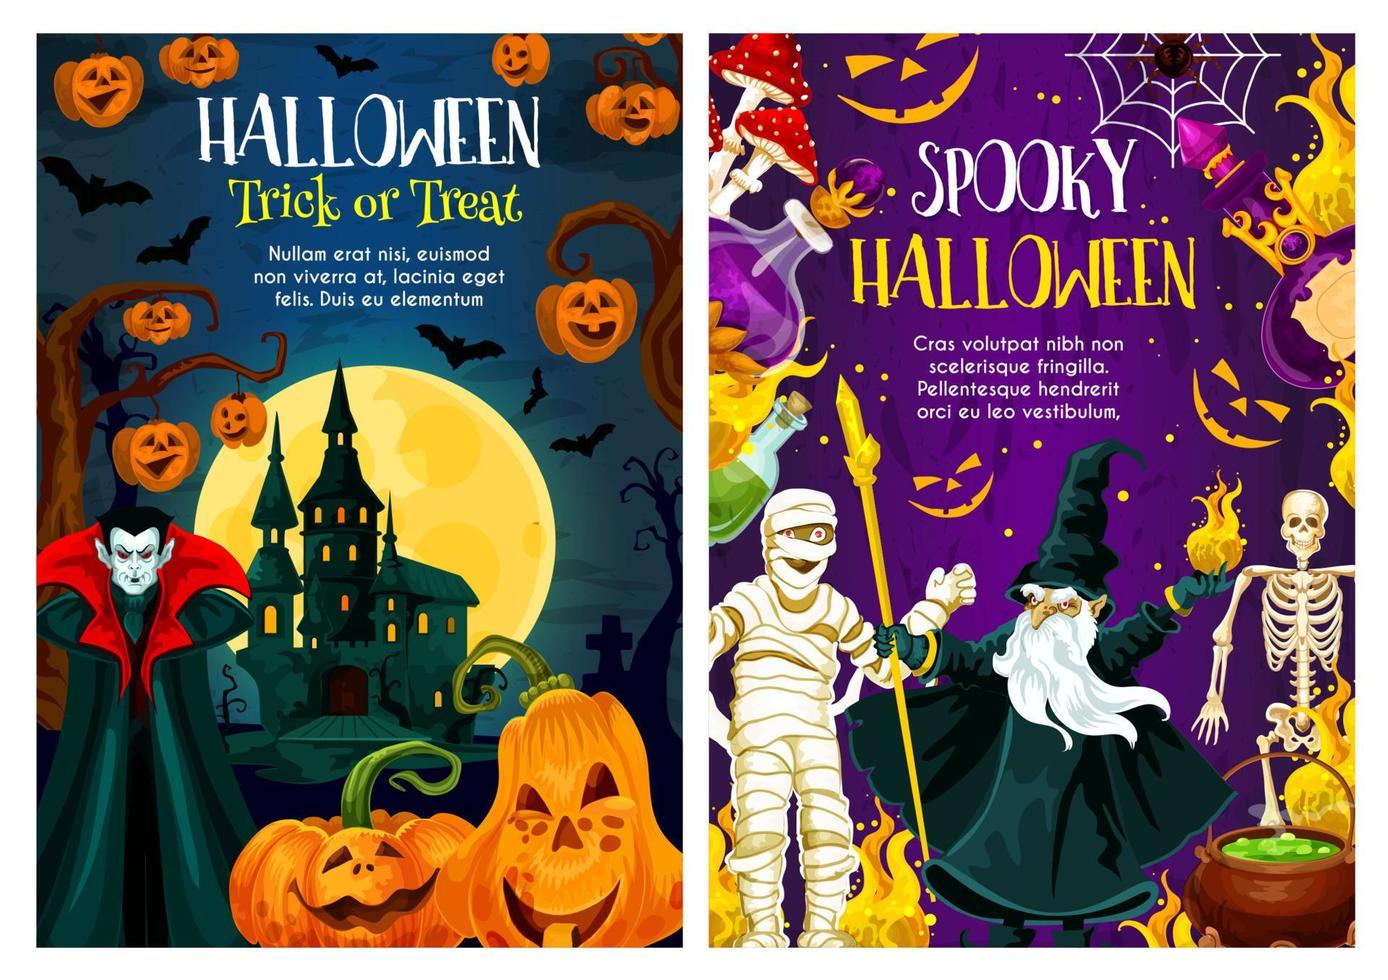 Halloween trick or treat night celebration banner vector